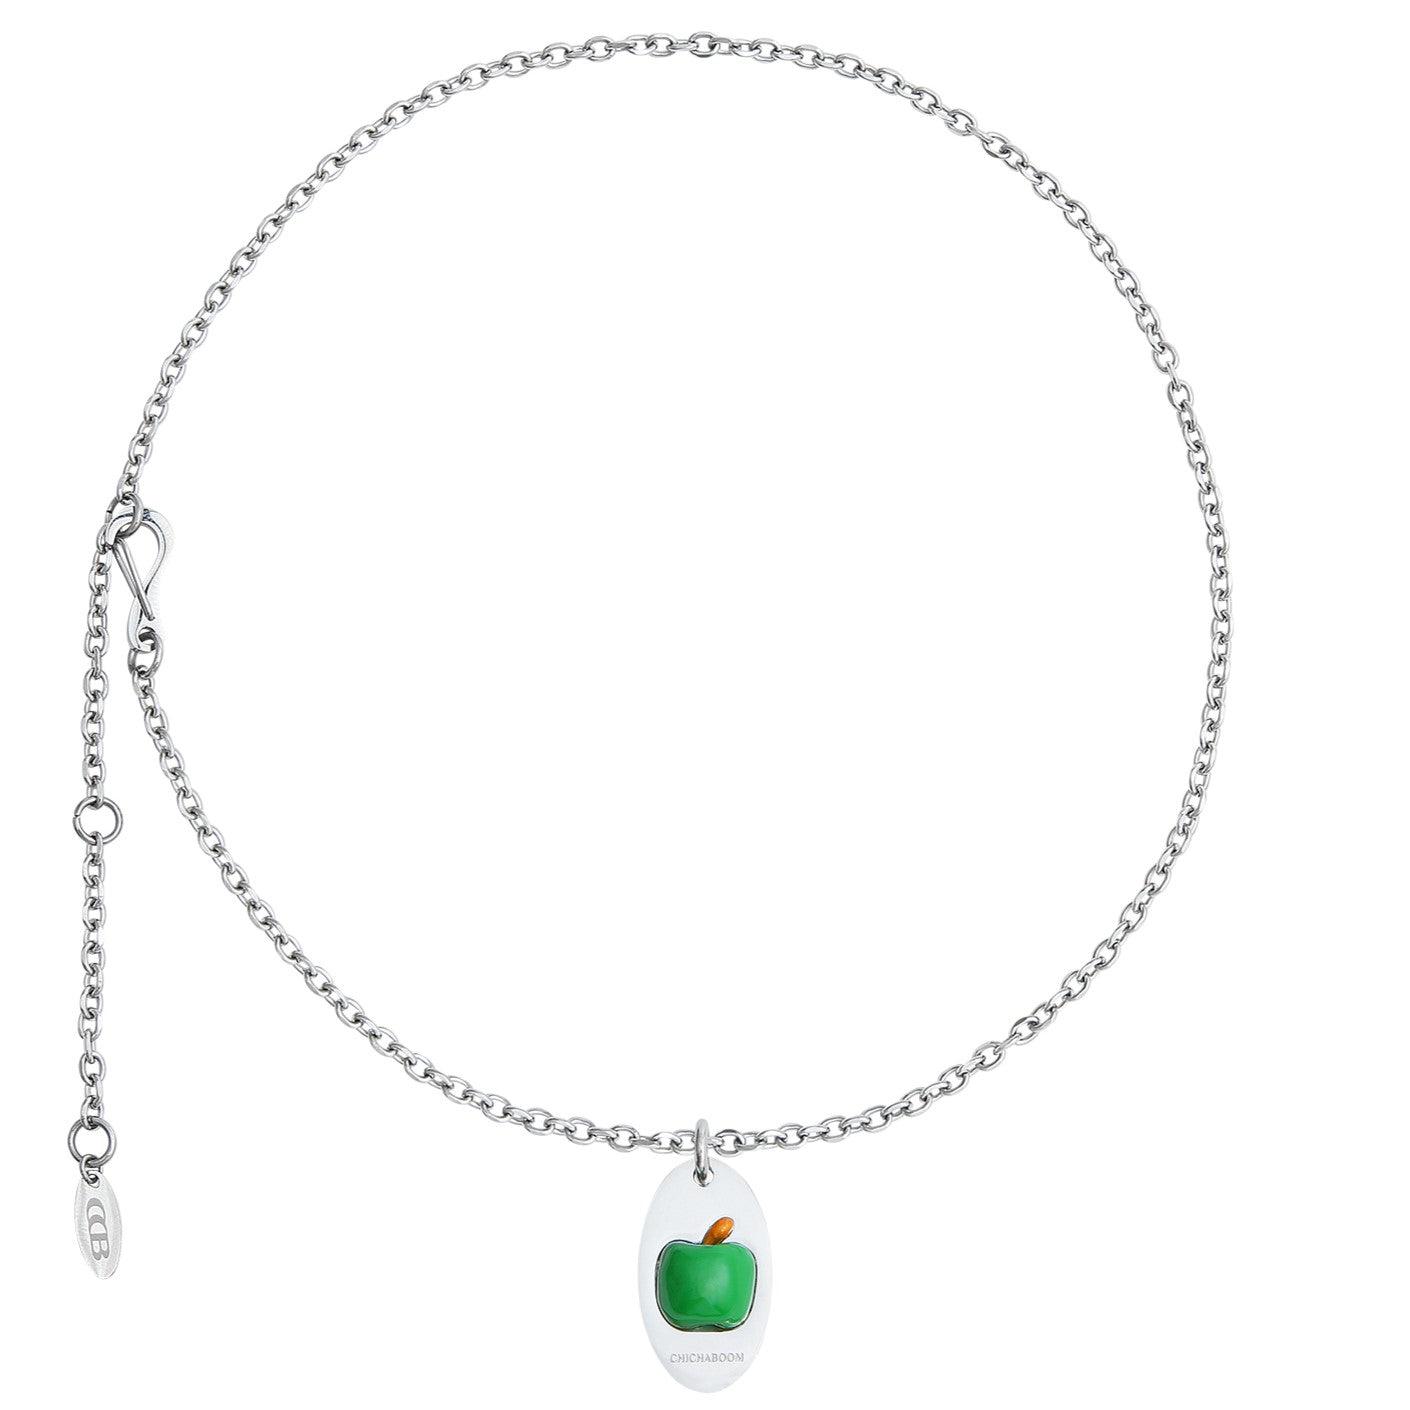 Enamel Green Apple Pendant Necklace - Uniqvibe